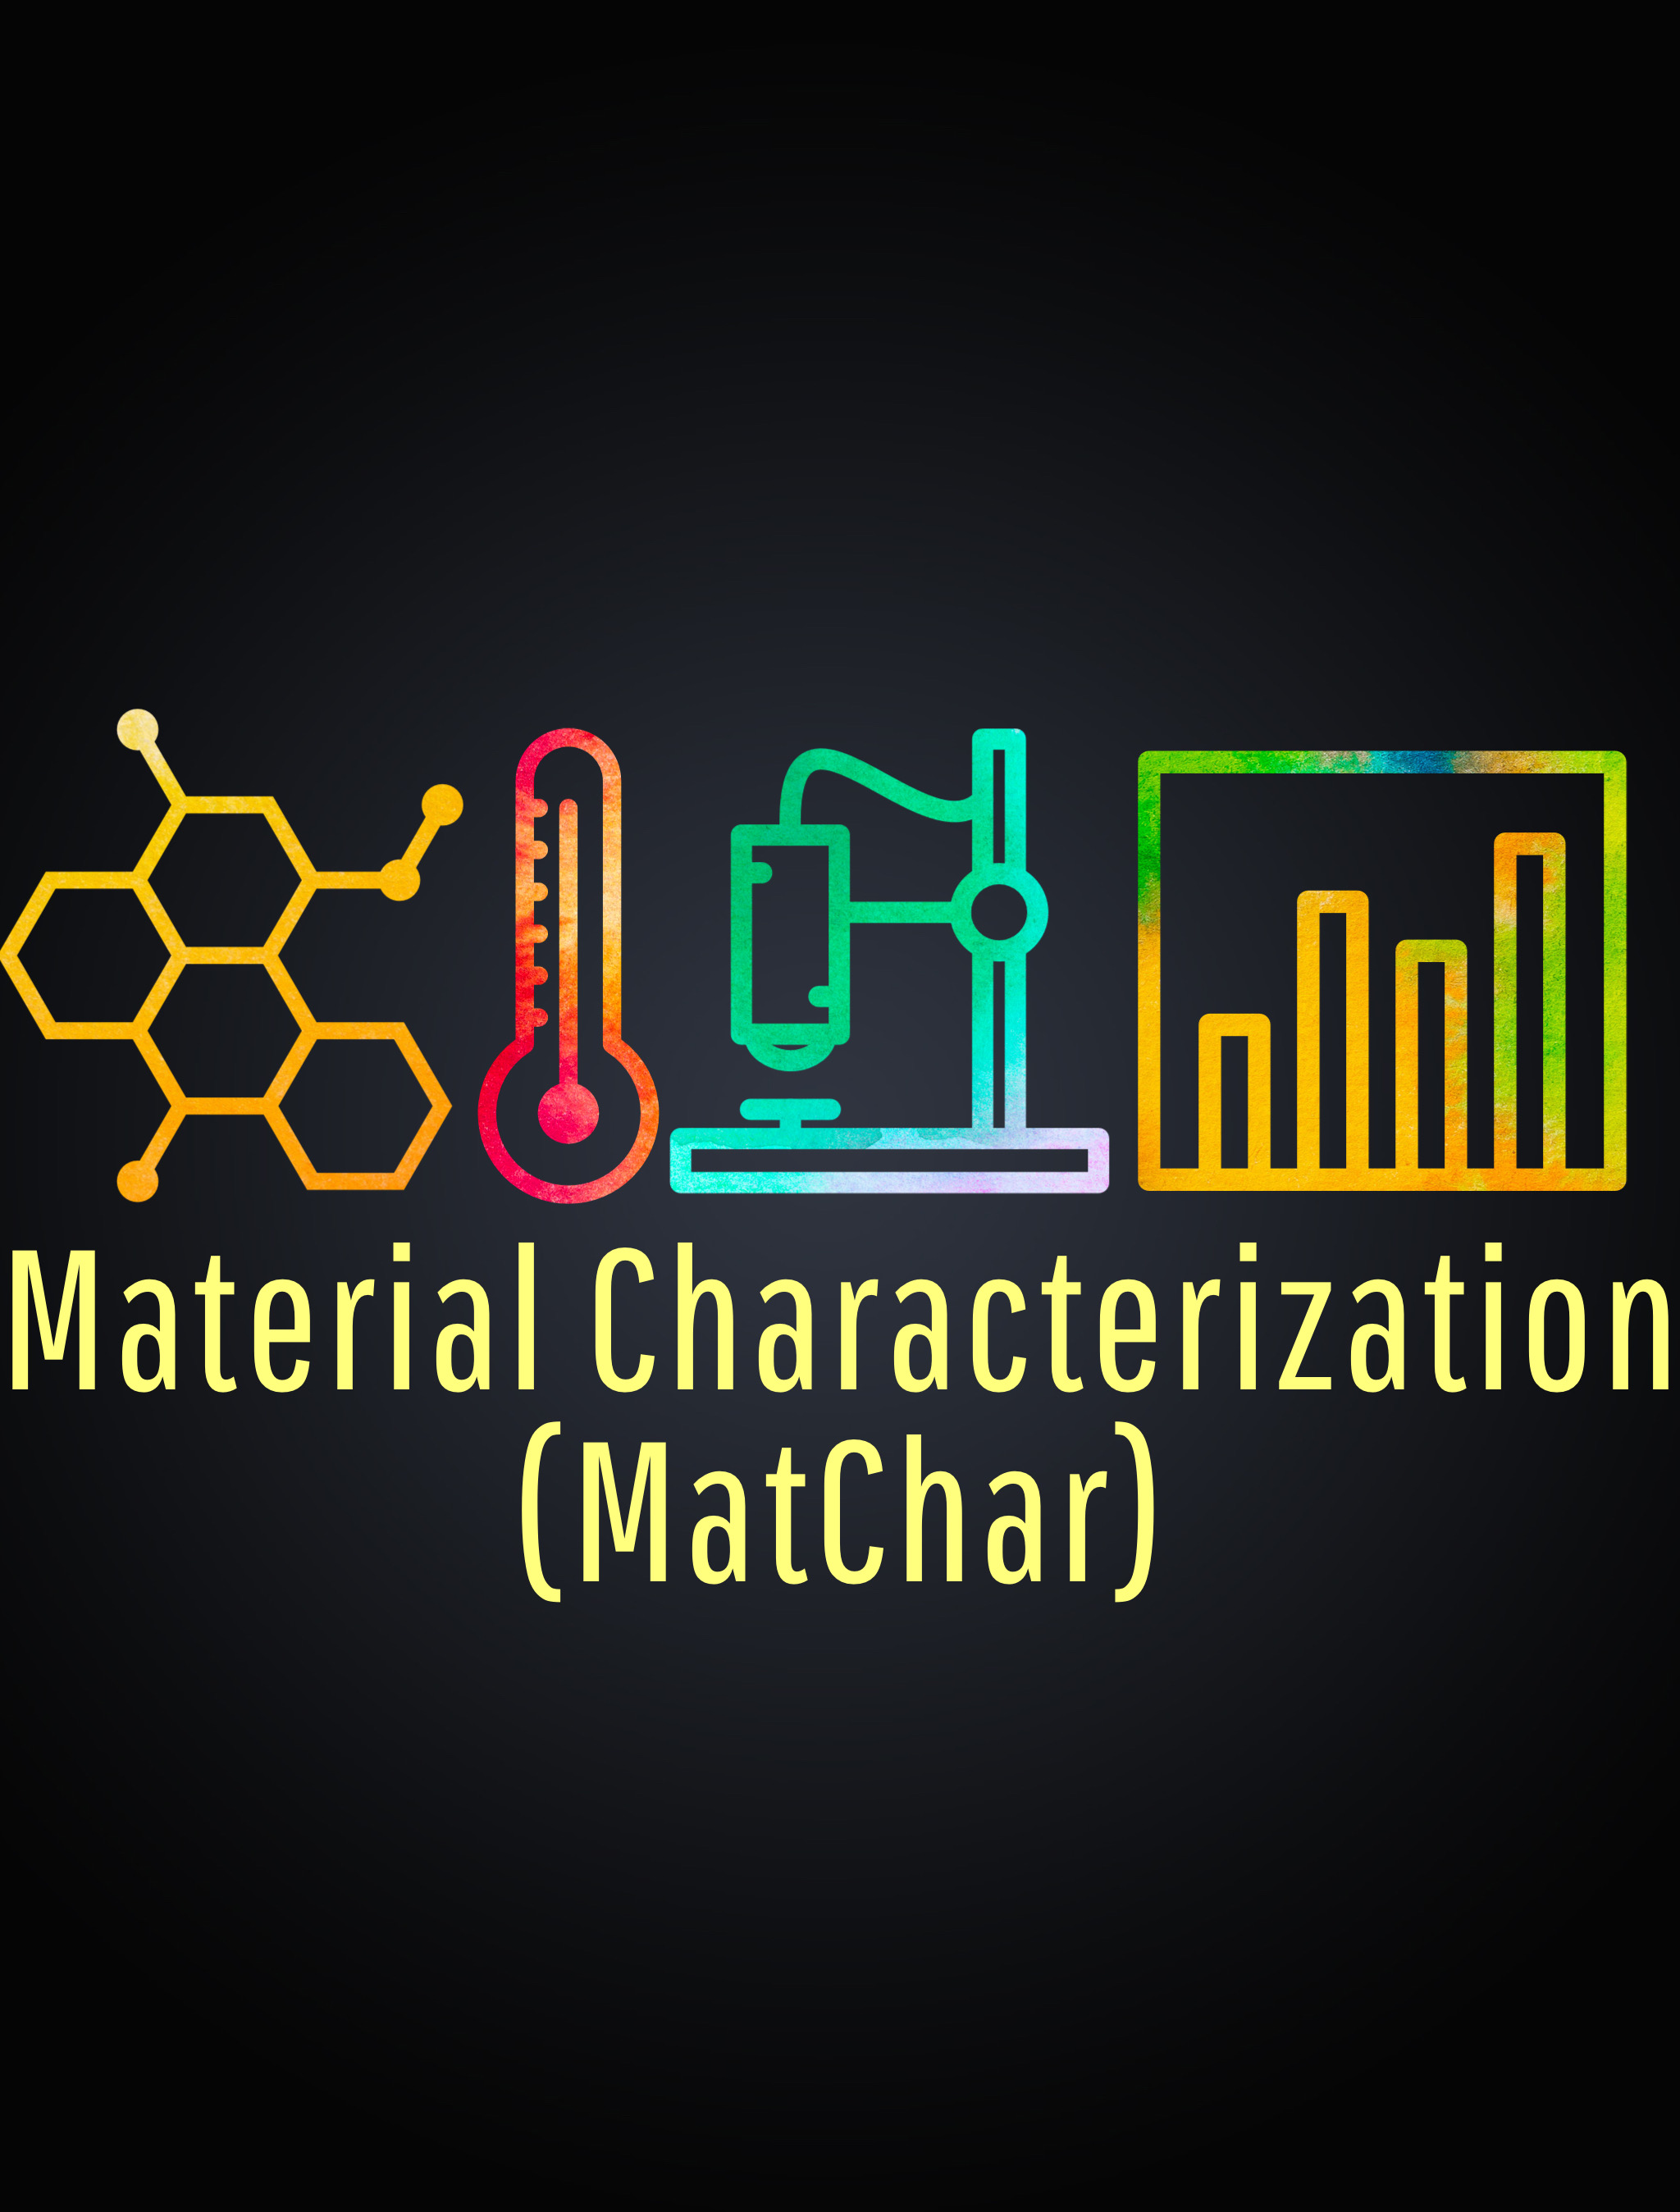 MatChar Logo